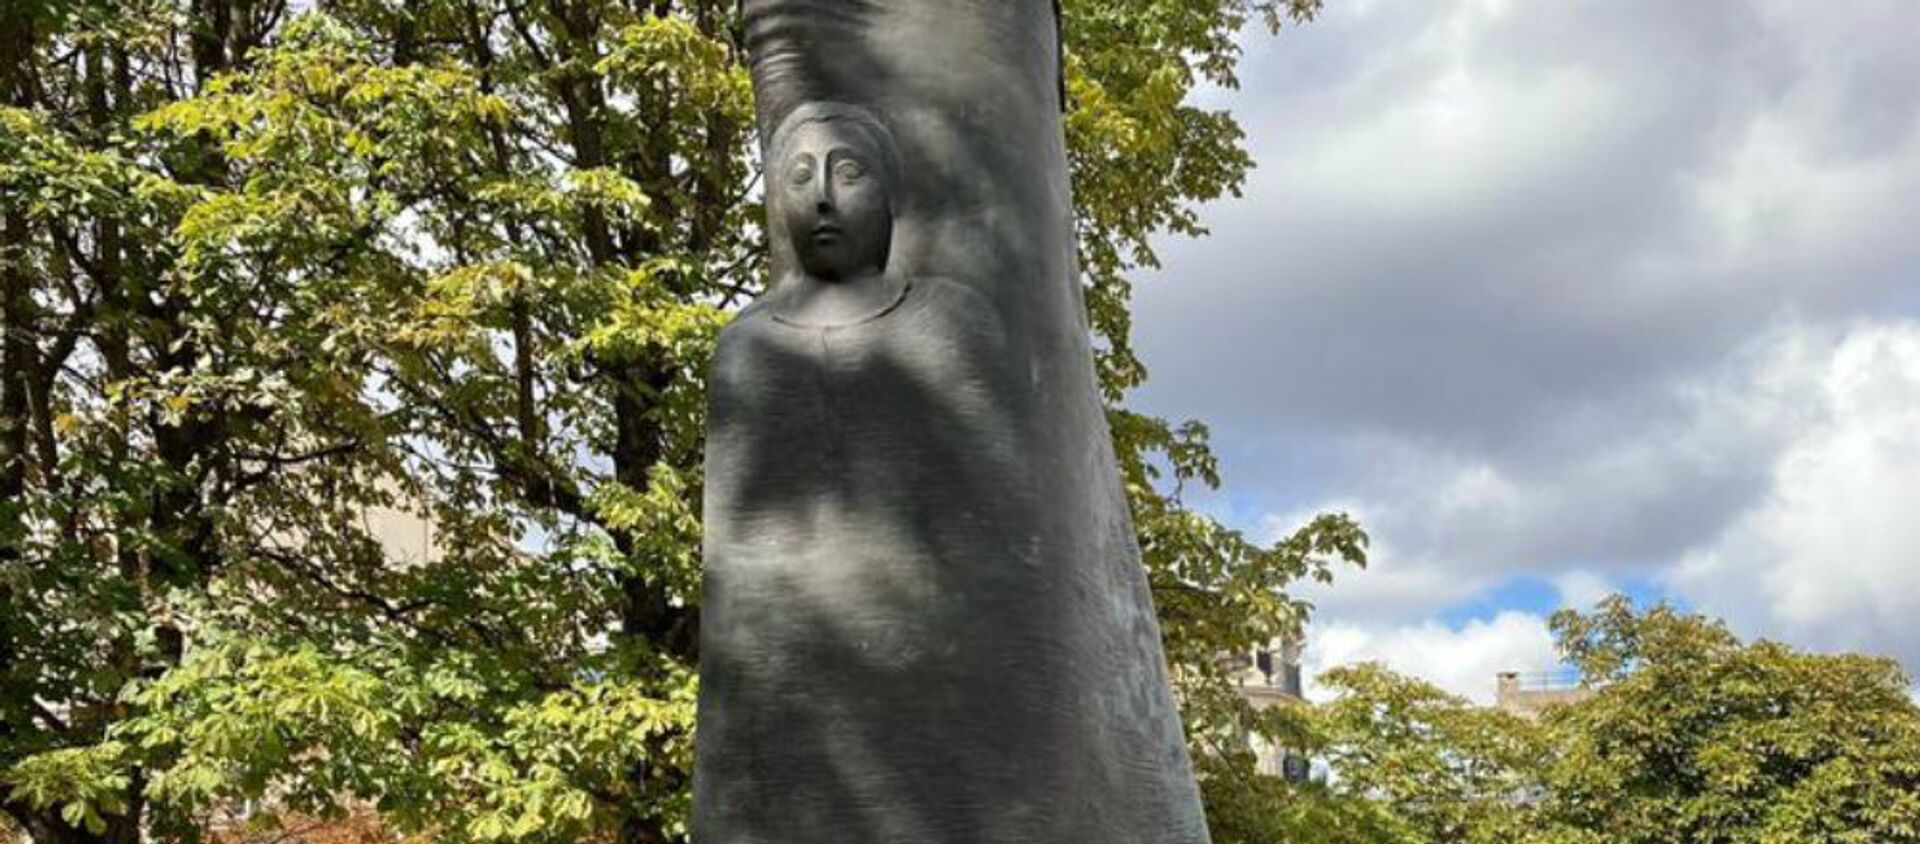 Оскверненная статуя Комитаса в Париже (30 августа 2020). - Sputnik Արմենիա, 1920, 31.08.2020